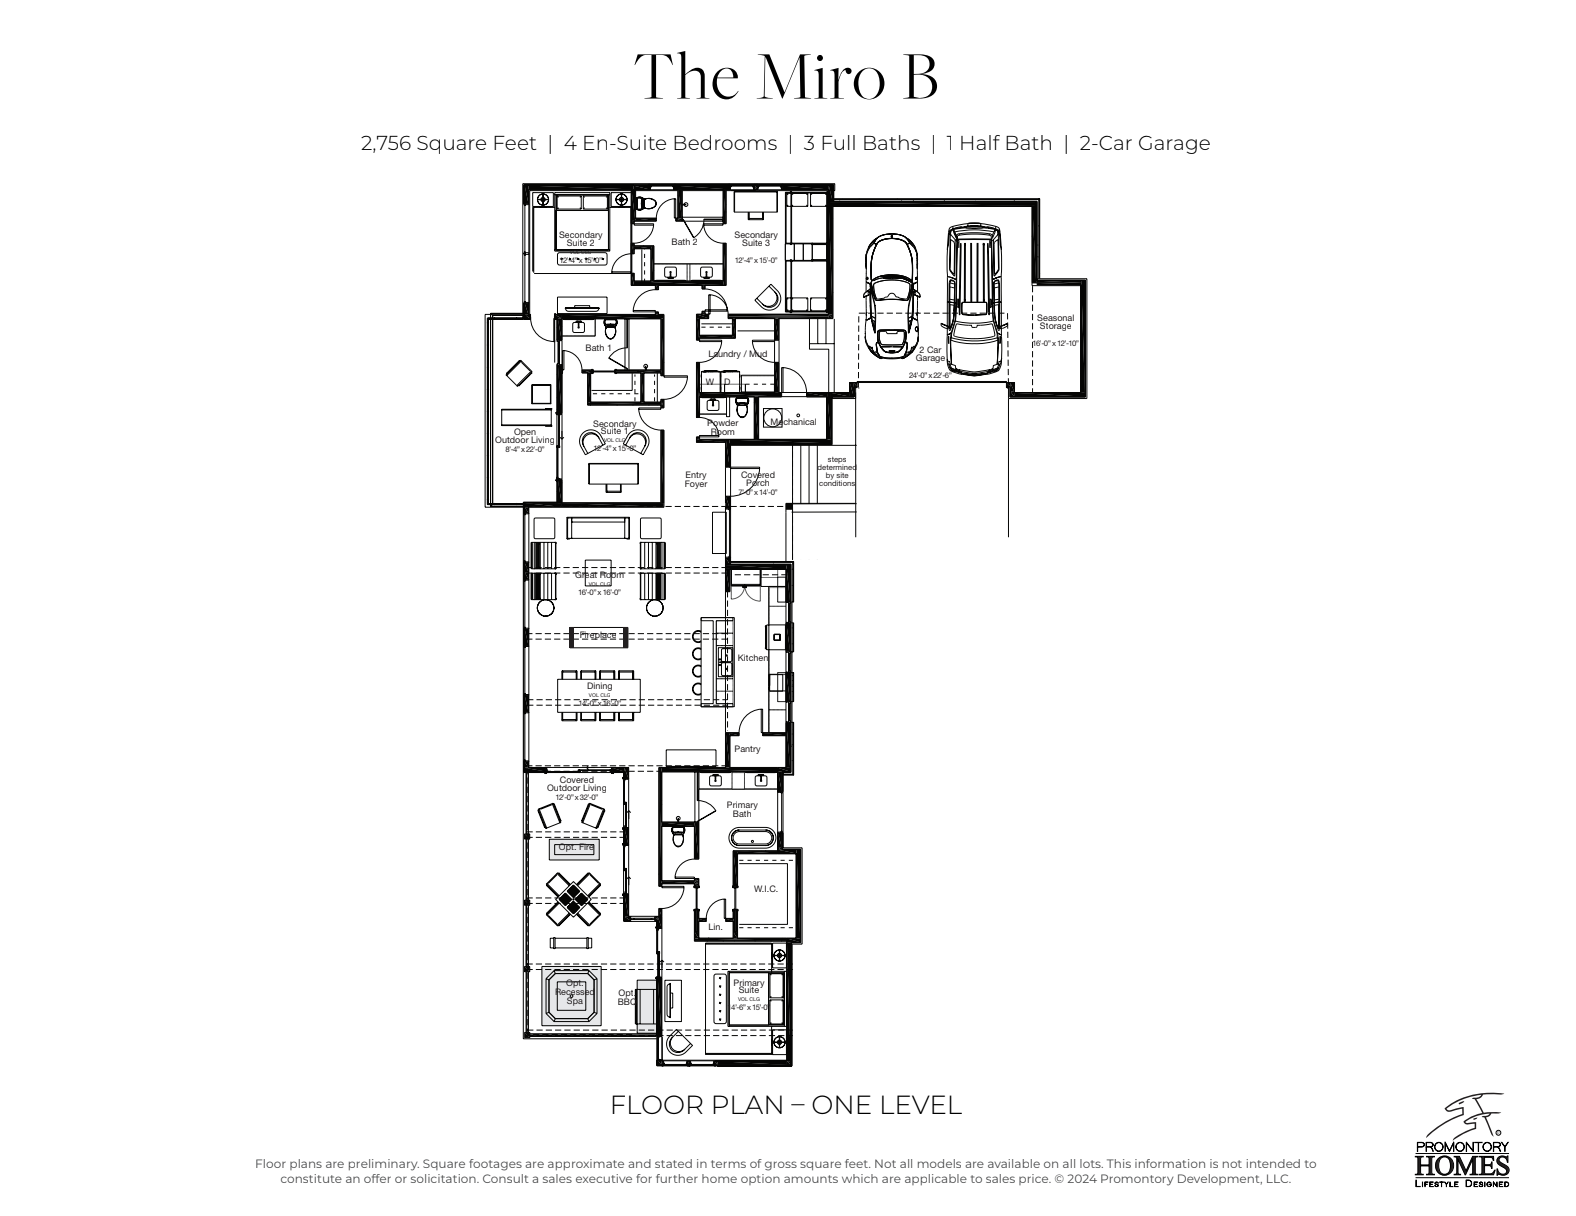 Promontory homes - The Miro B